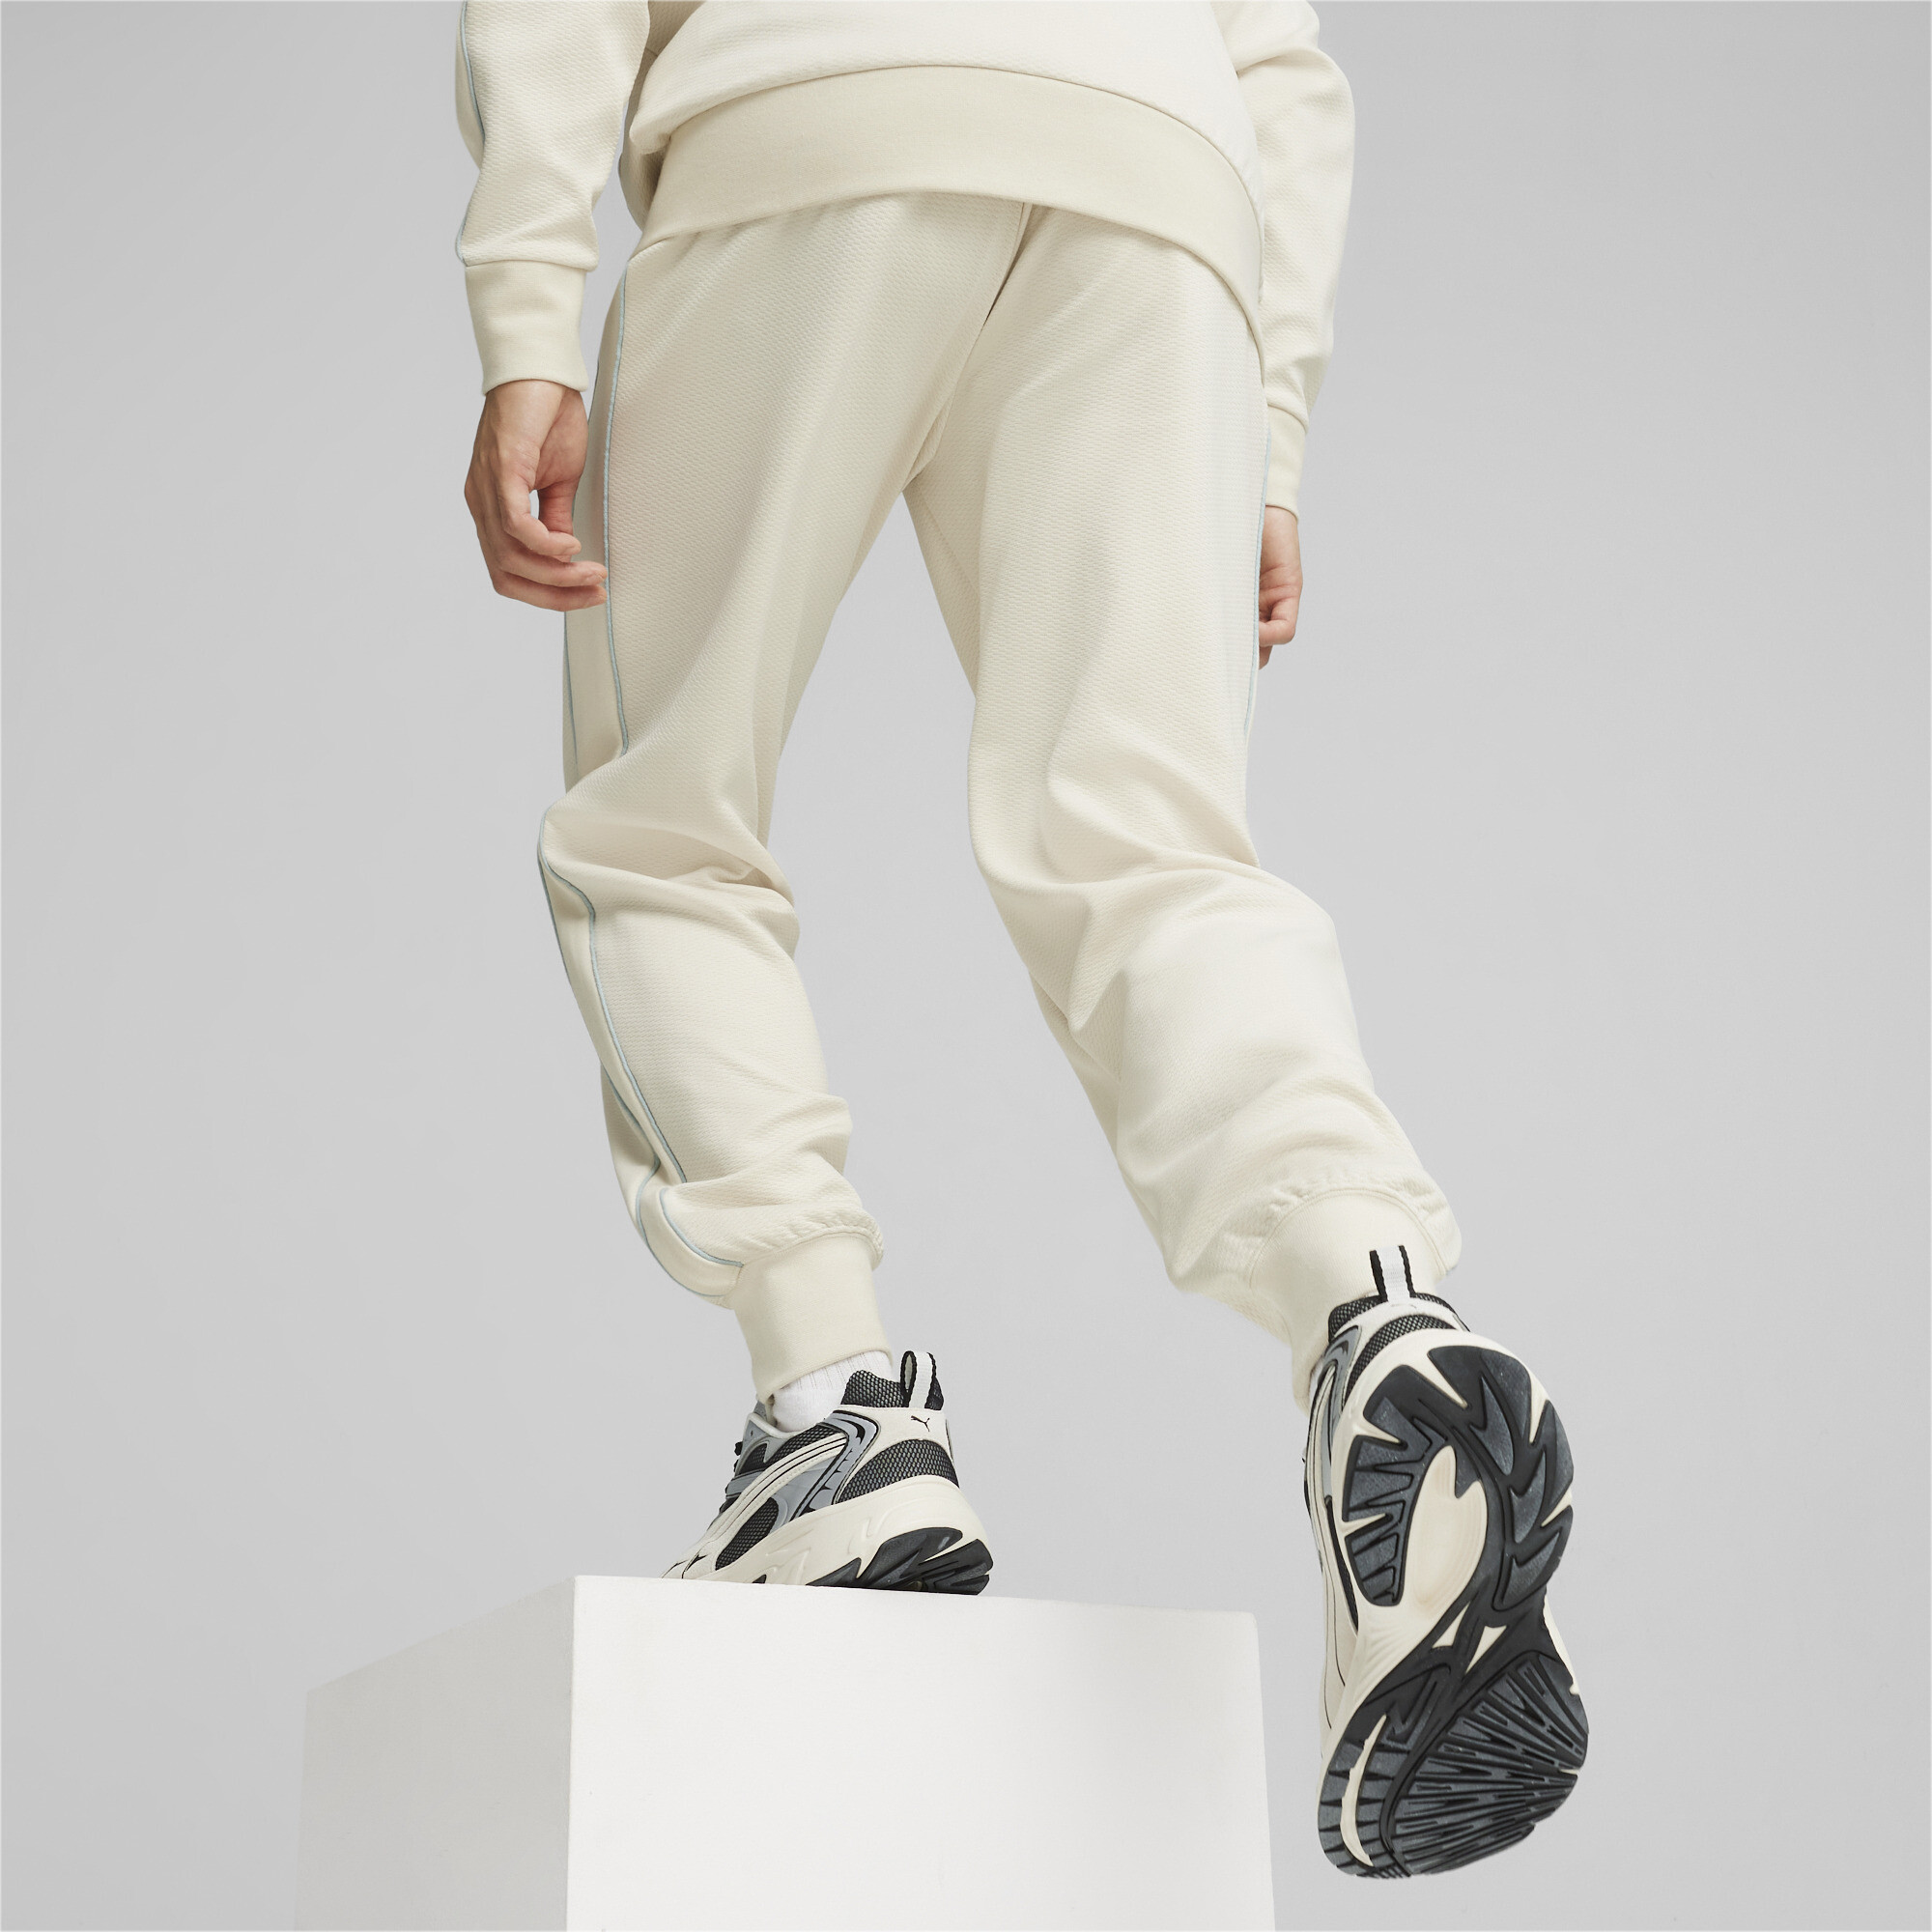 Men's Puma T7's Track Pants, White, Size S, Clothing